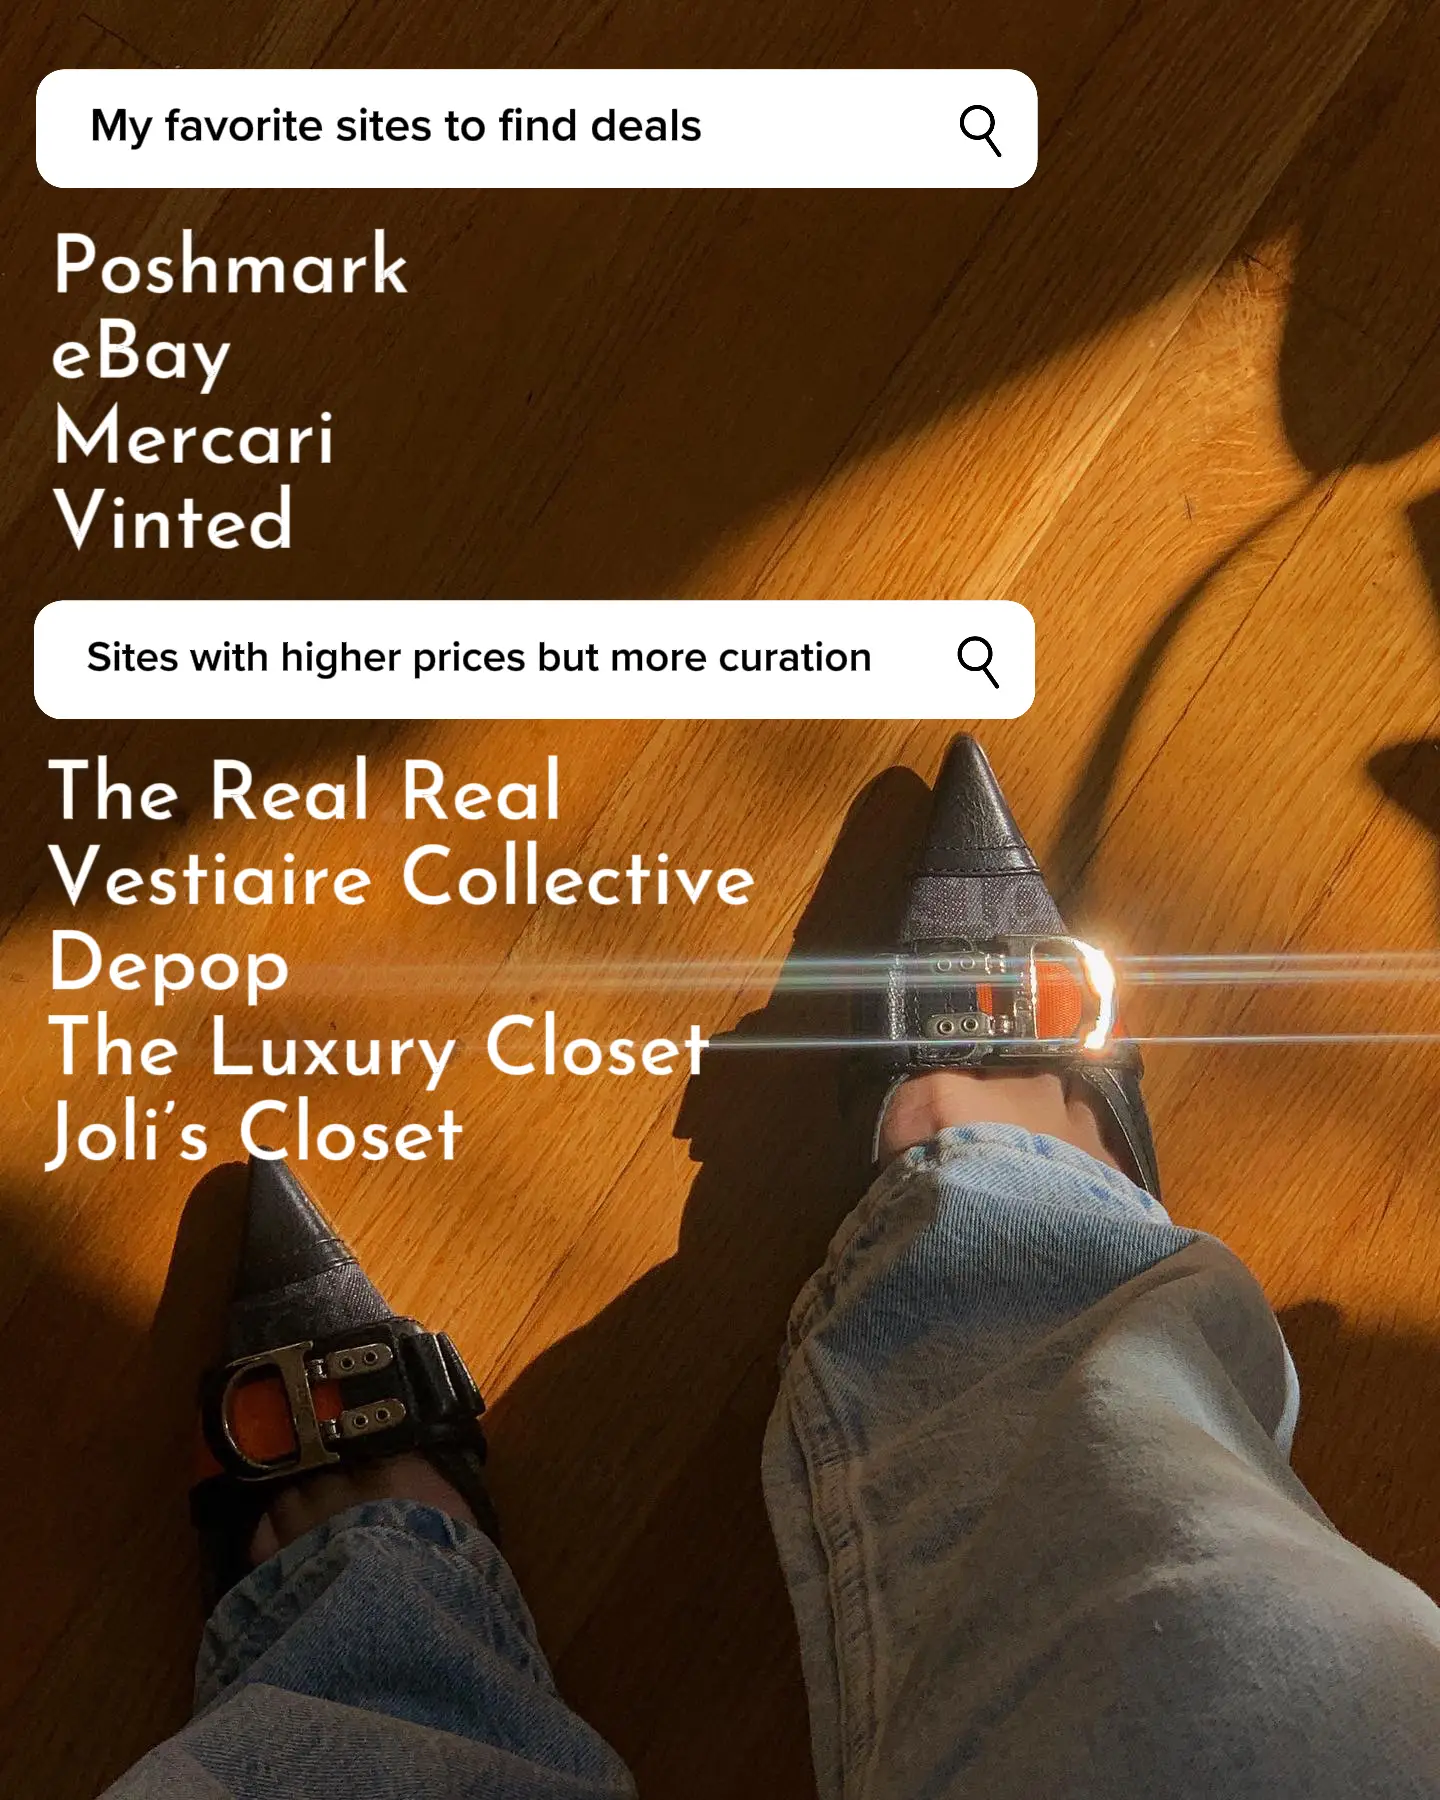 Louis Vuitton Women's Heels  Buy or Sell Designer Shoes - Vestiaire  Collective